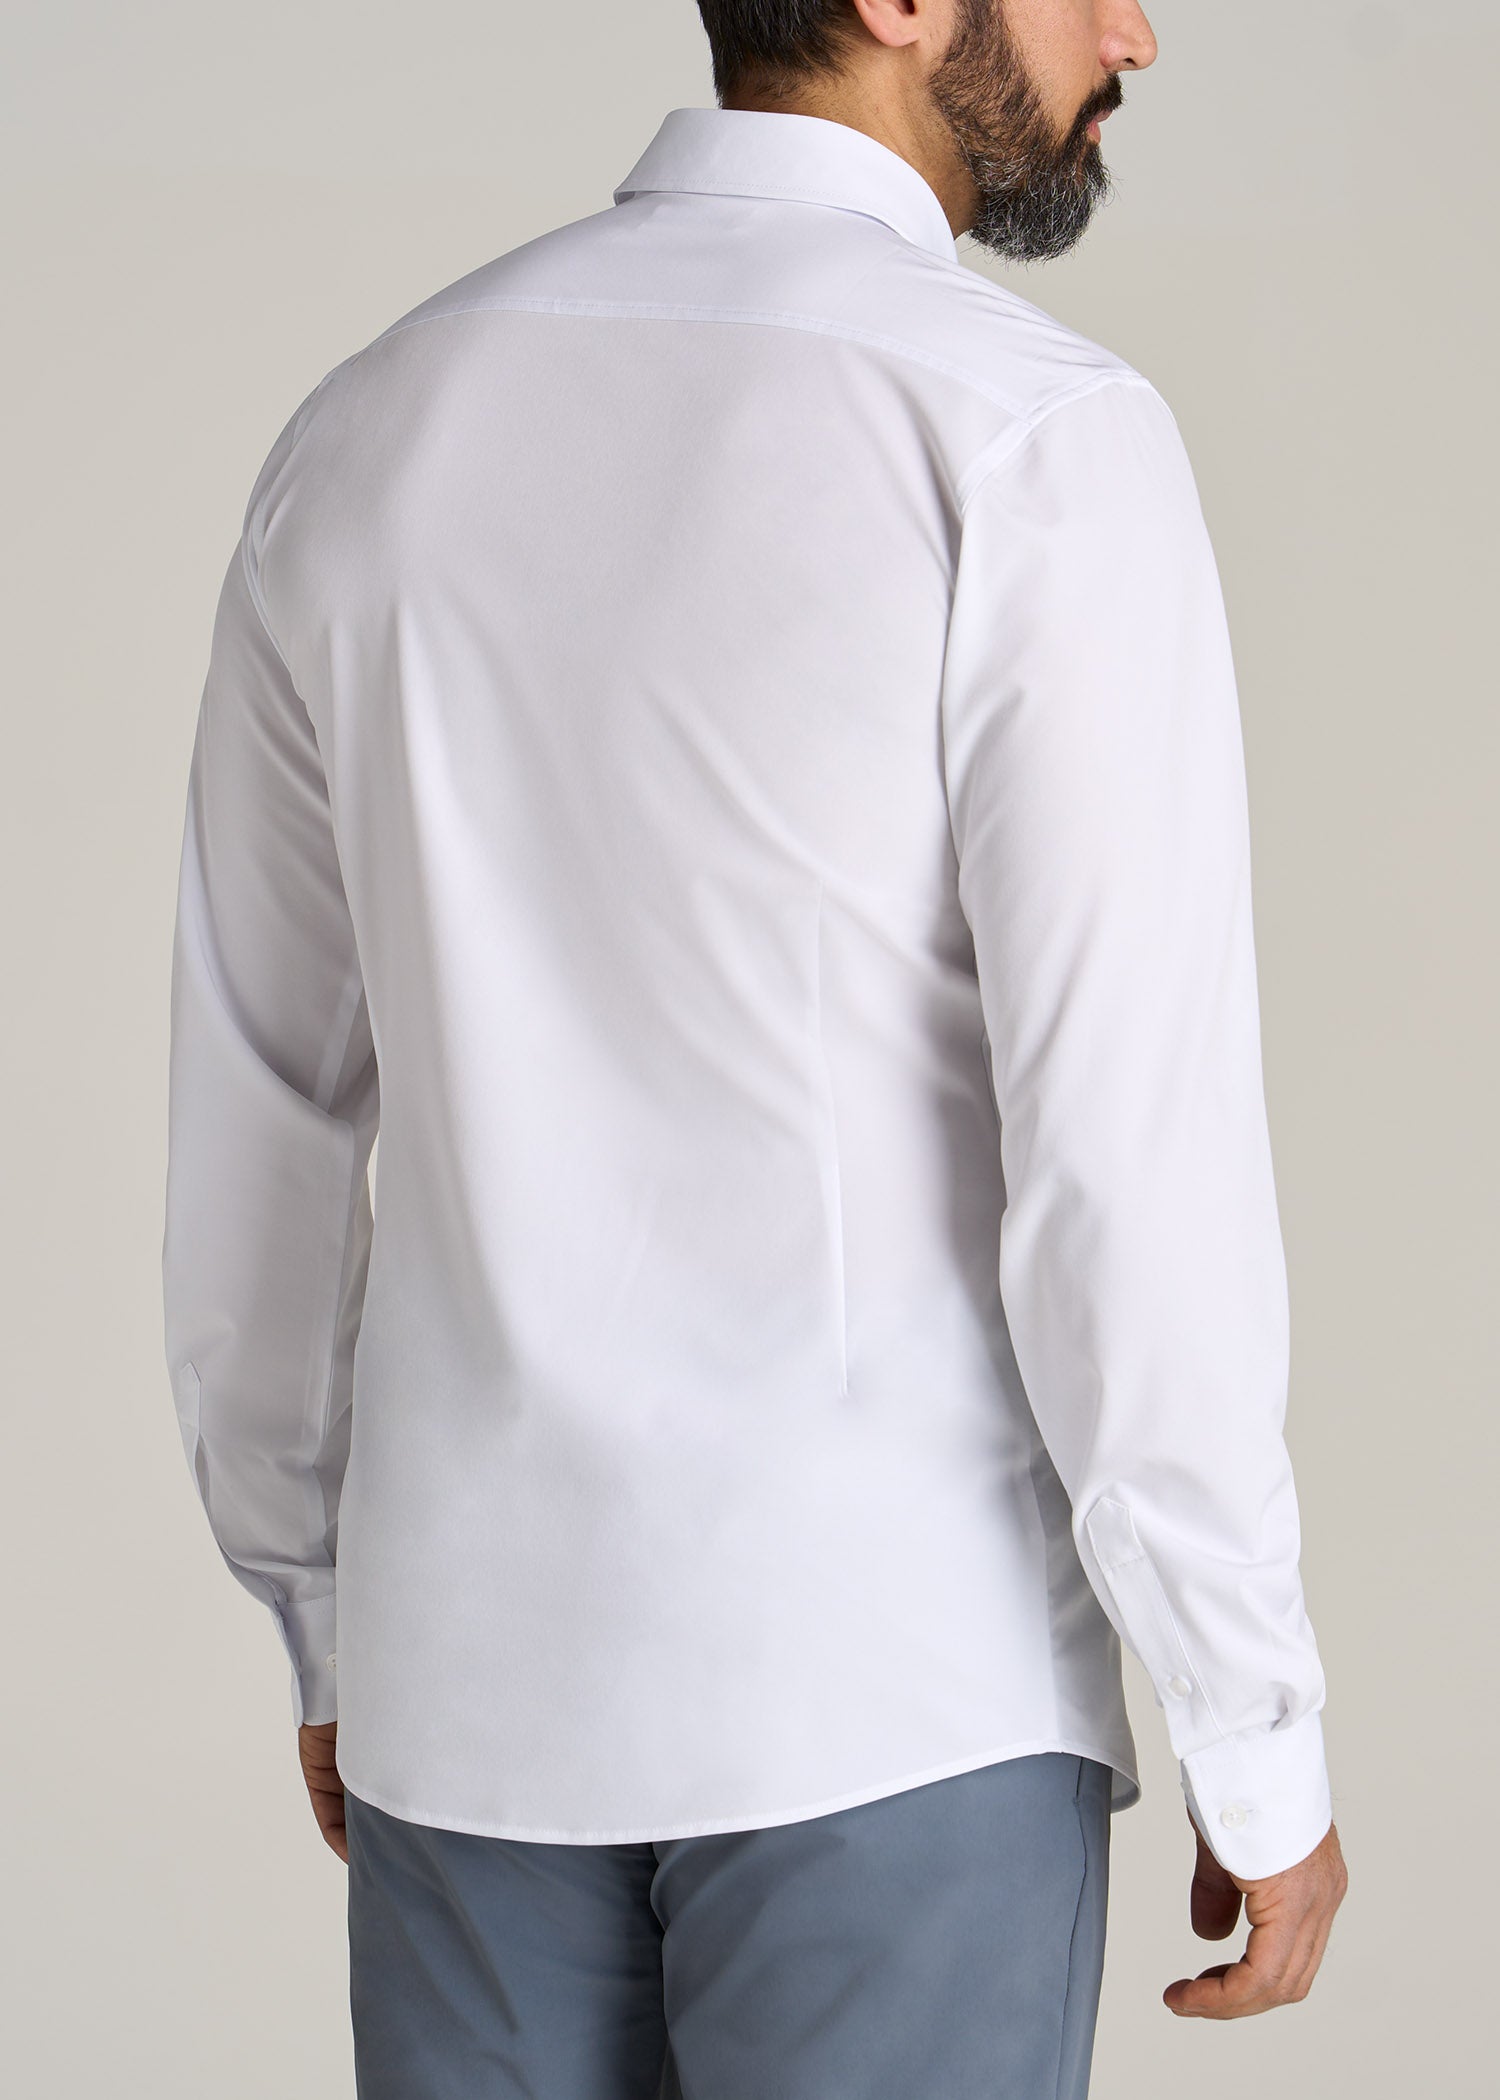 Men's Tall Traveler Stretch Dress Shirt White | American Tall